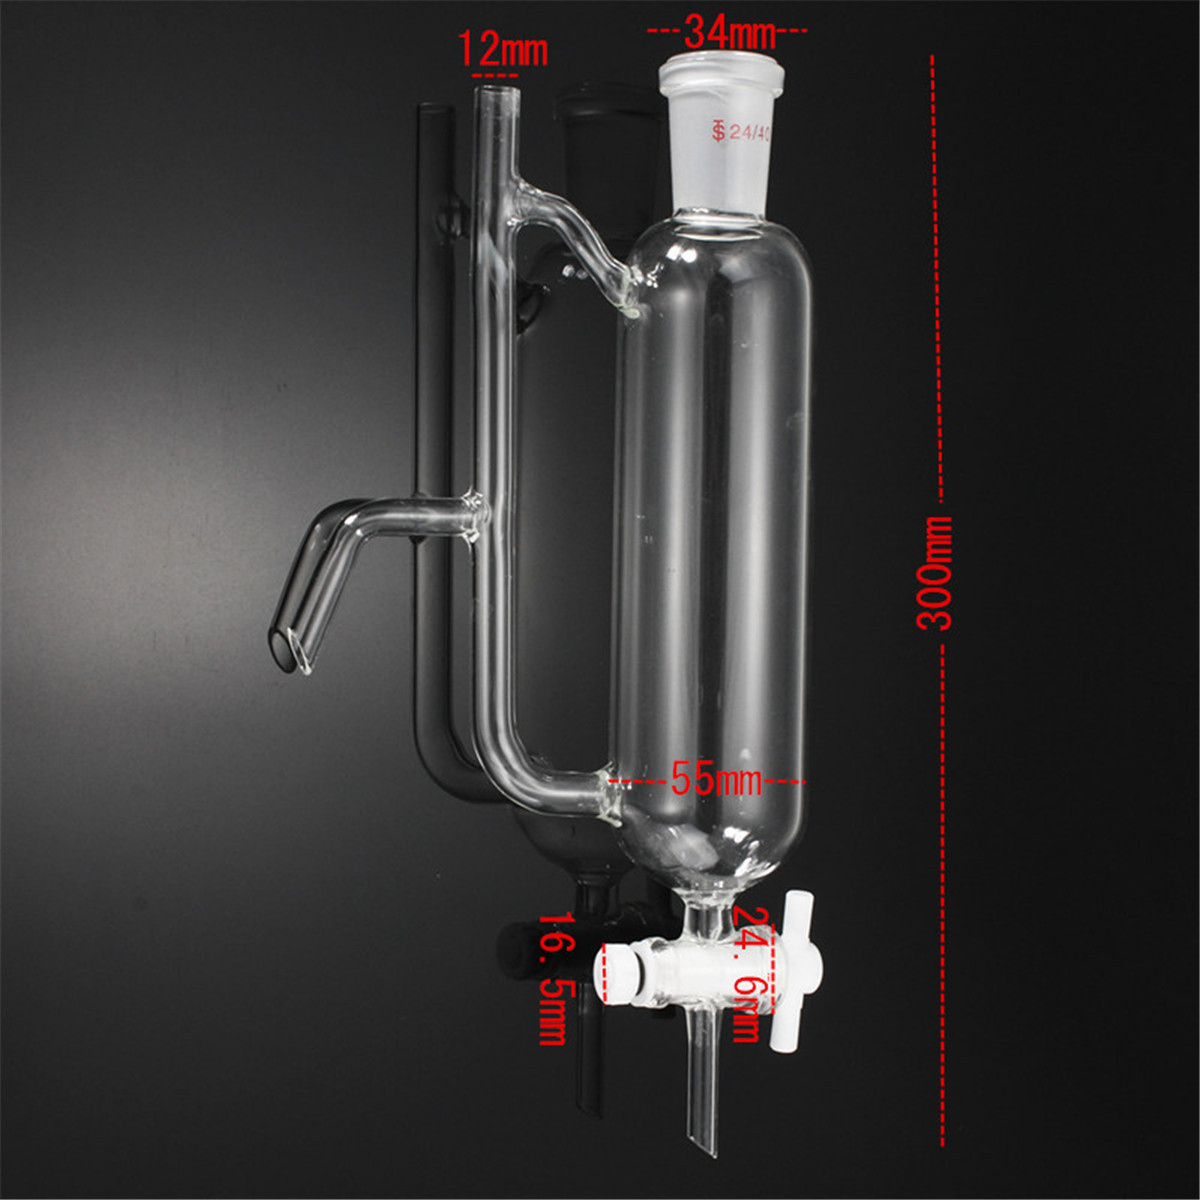 2440-Glass-Oil-Water-Receiver-Separator-Essential-Oil-Distillation-Kit-Part-Lab-1046711-6